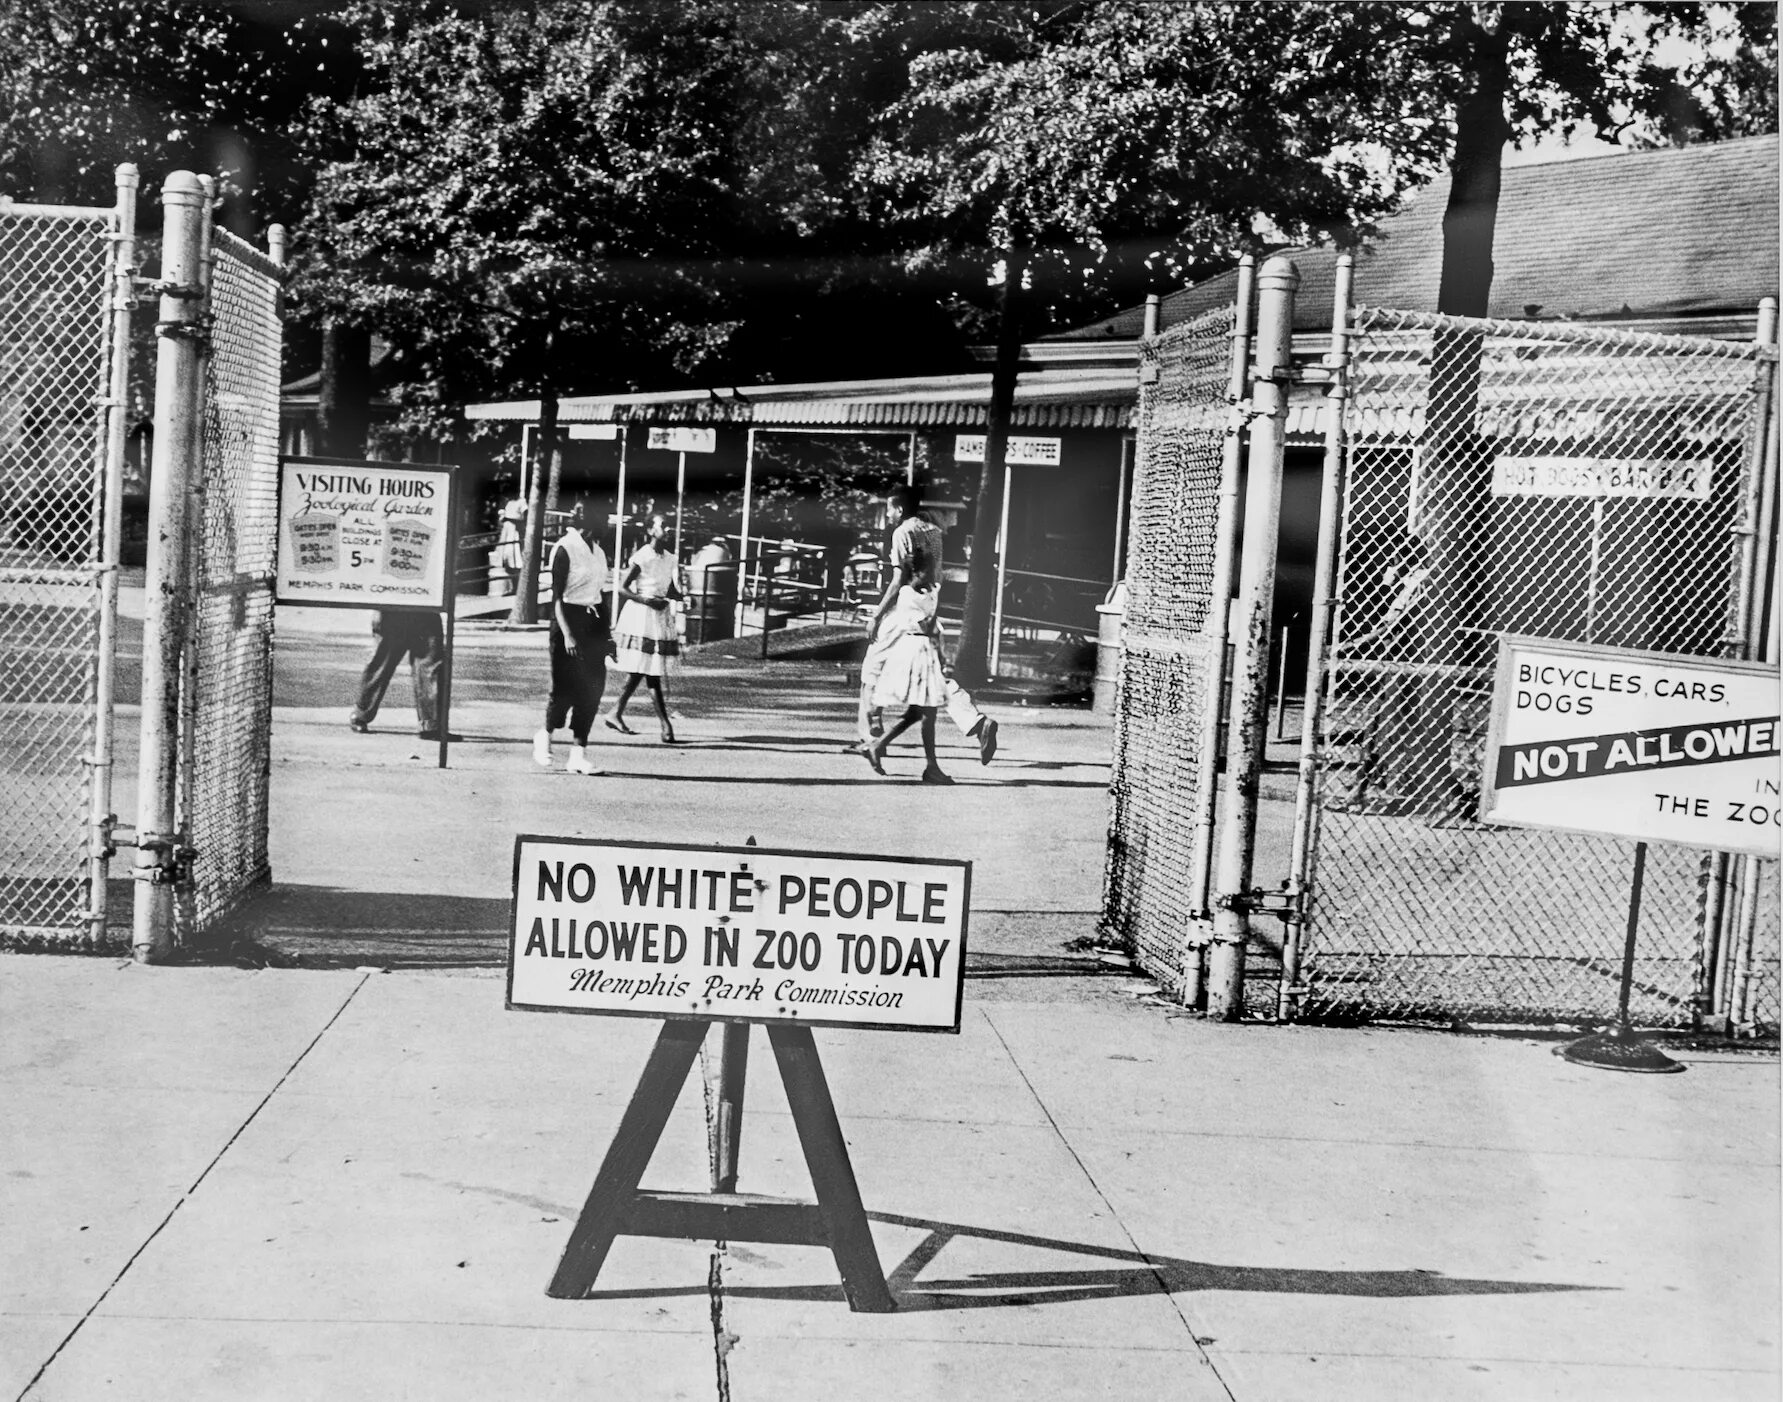 Previews allowed. Только для белых табличка в США. Only White people. No Whites allowed. Not allowed people.